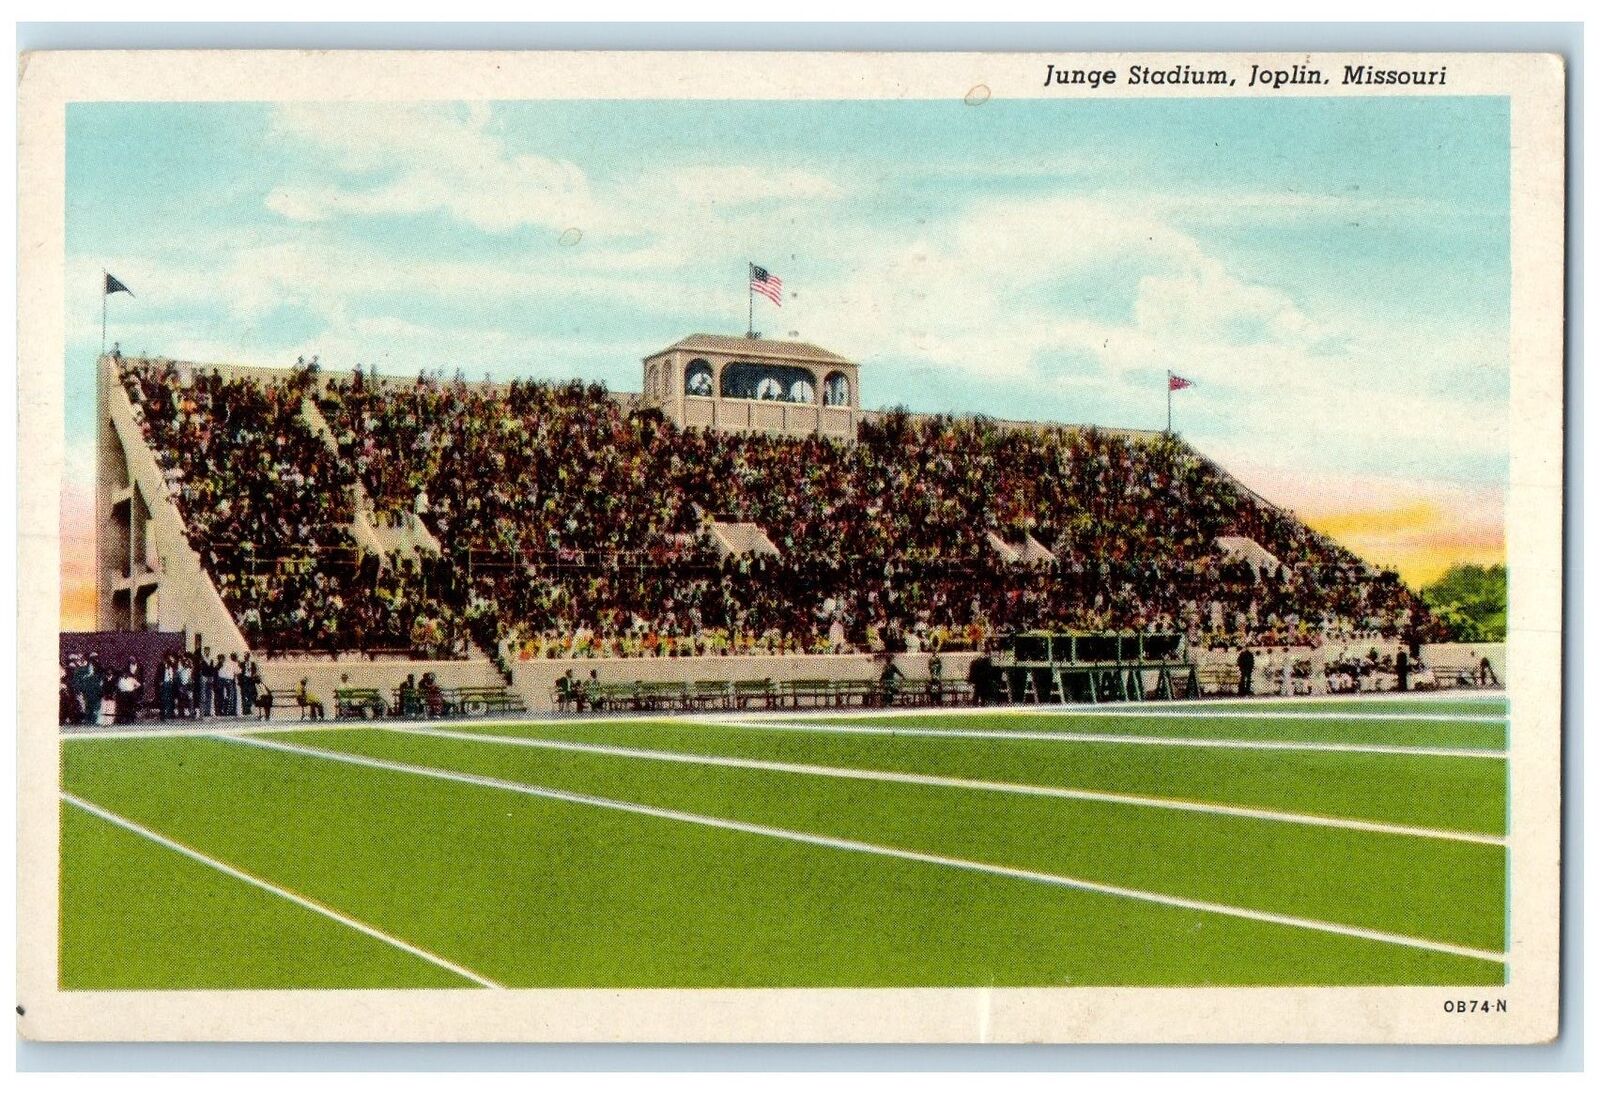 1963 Junge Stadium Field Grandstand Crowd Joplin Missouri MO Posted Postcard